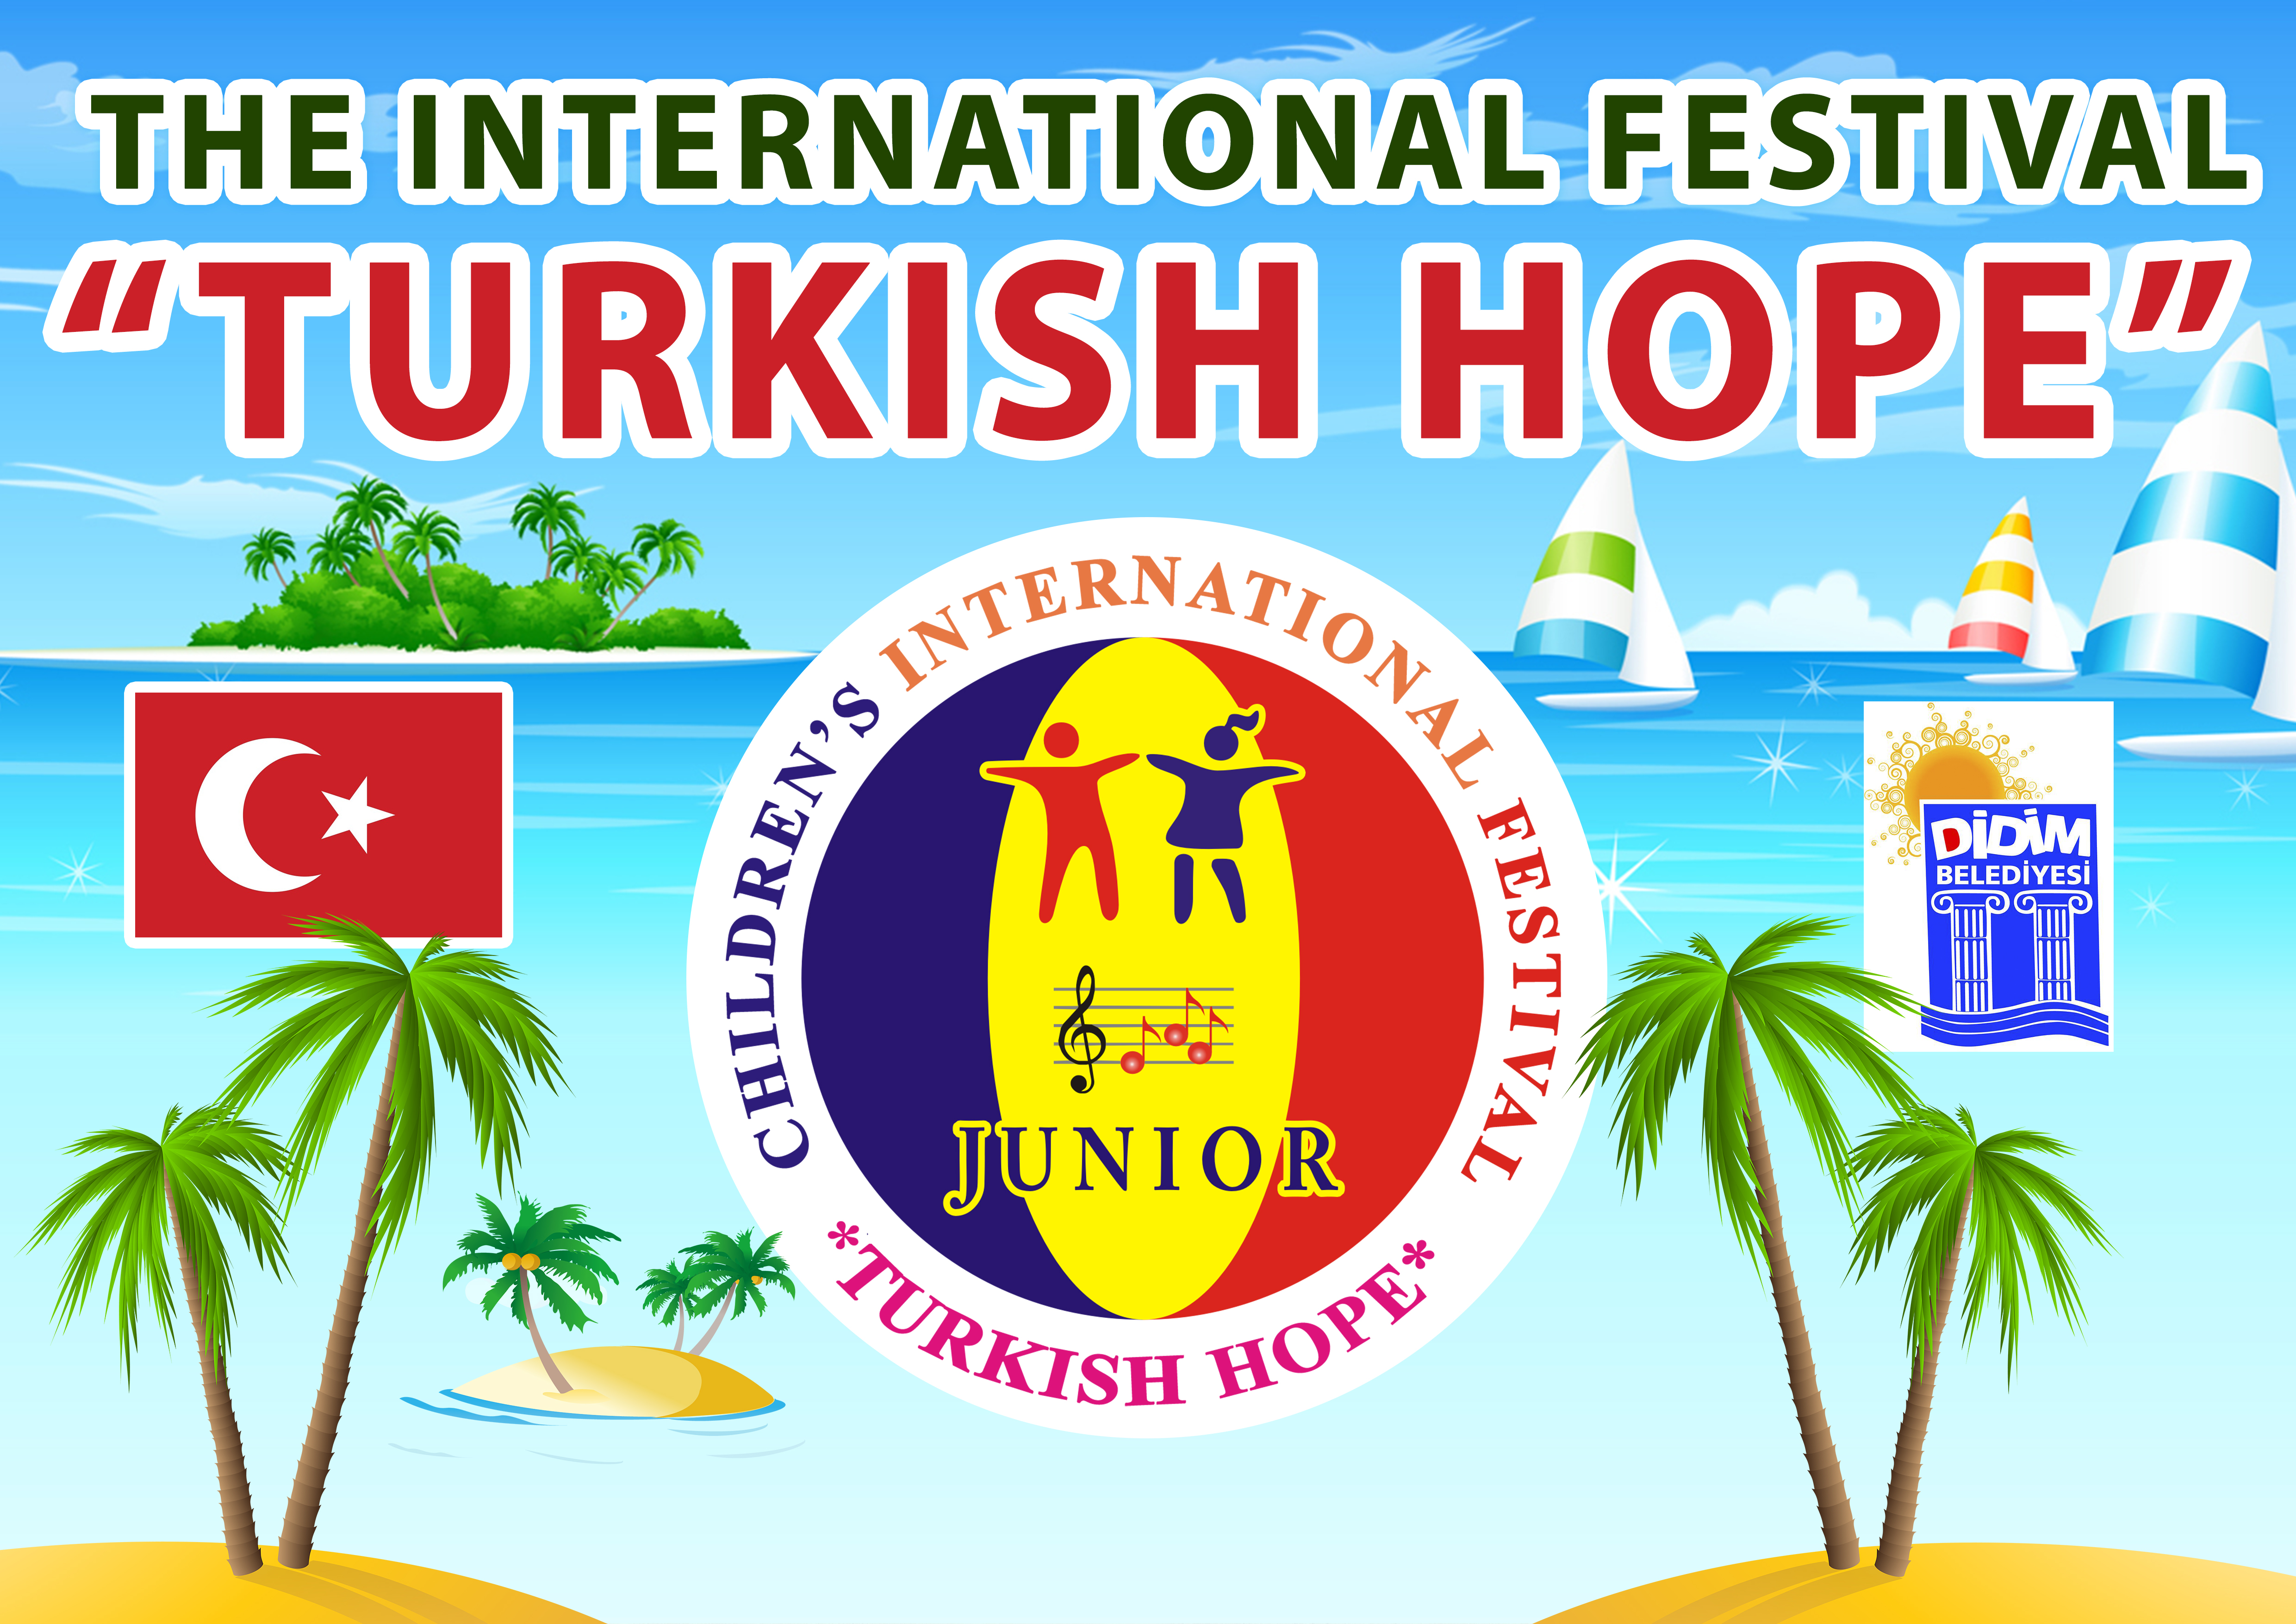 A3 ТАБЛИЧКА TURKISH HOPE 2020 — JUNIOR